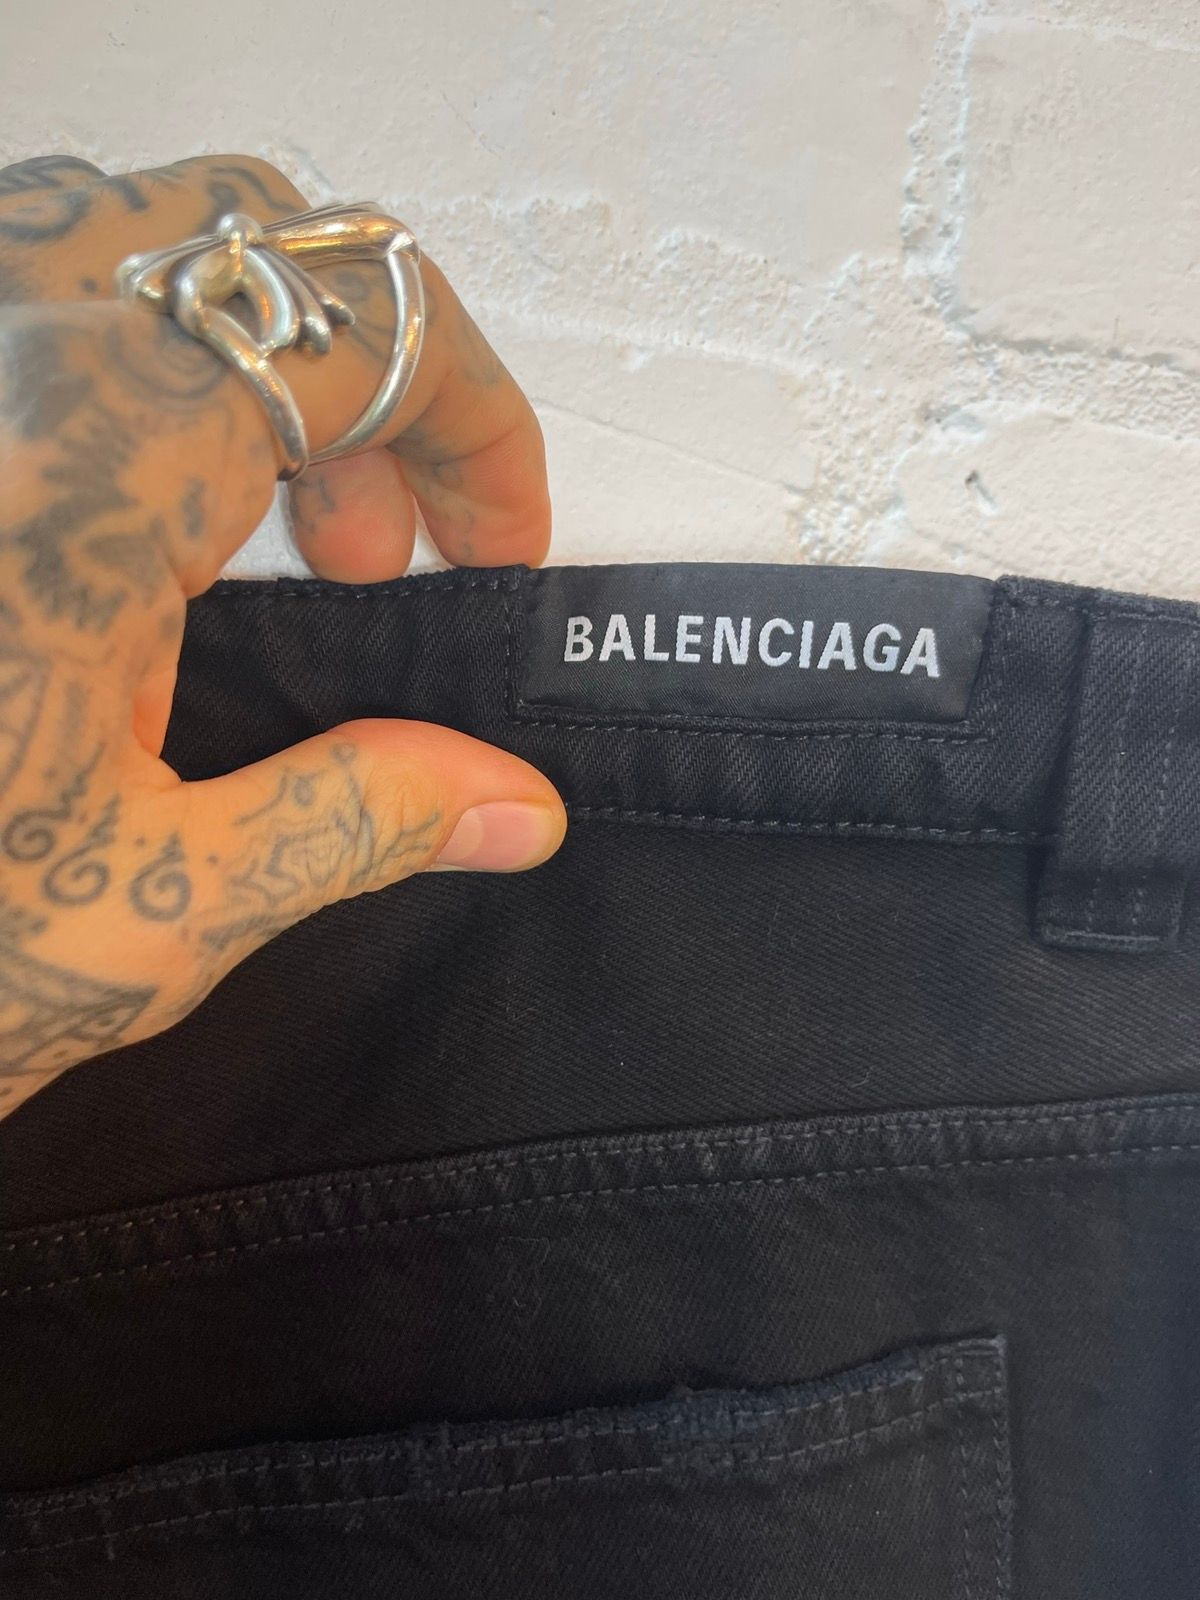 Balenciaga NEW DENIM Black LONG JORTS SHORTS 33-36 LARGE